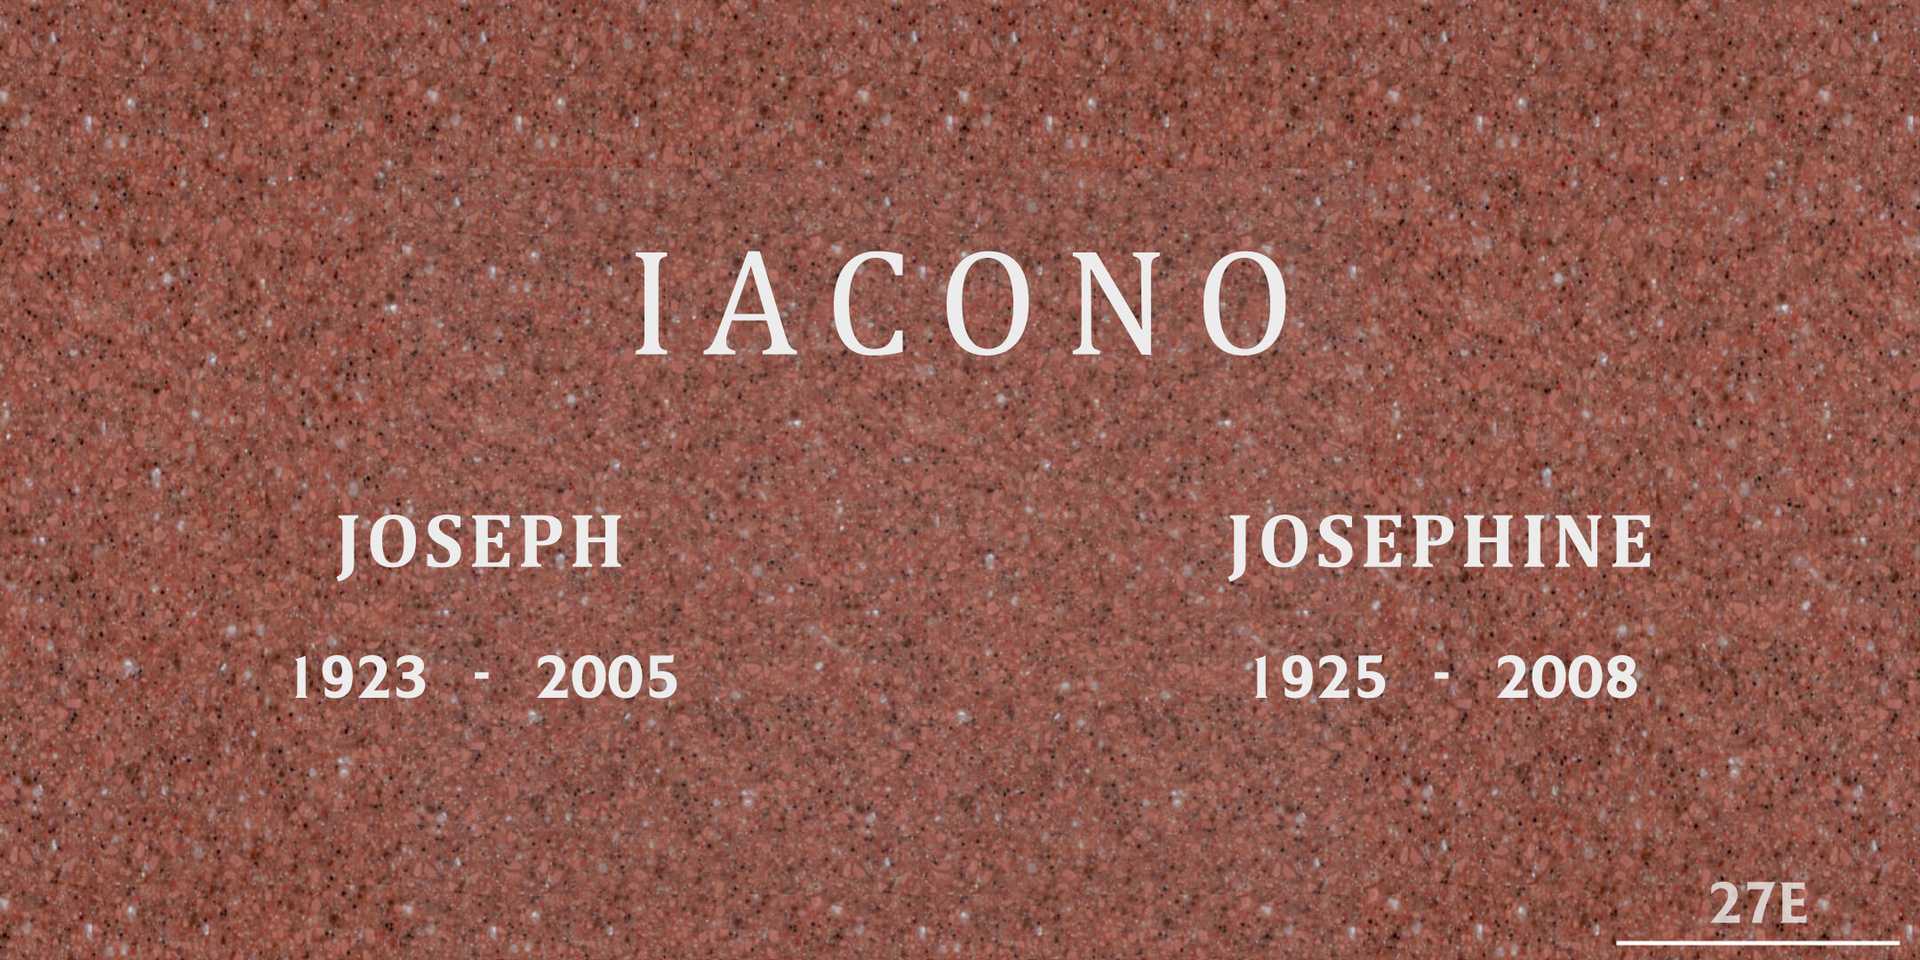 Joseph Iacono's grave